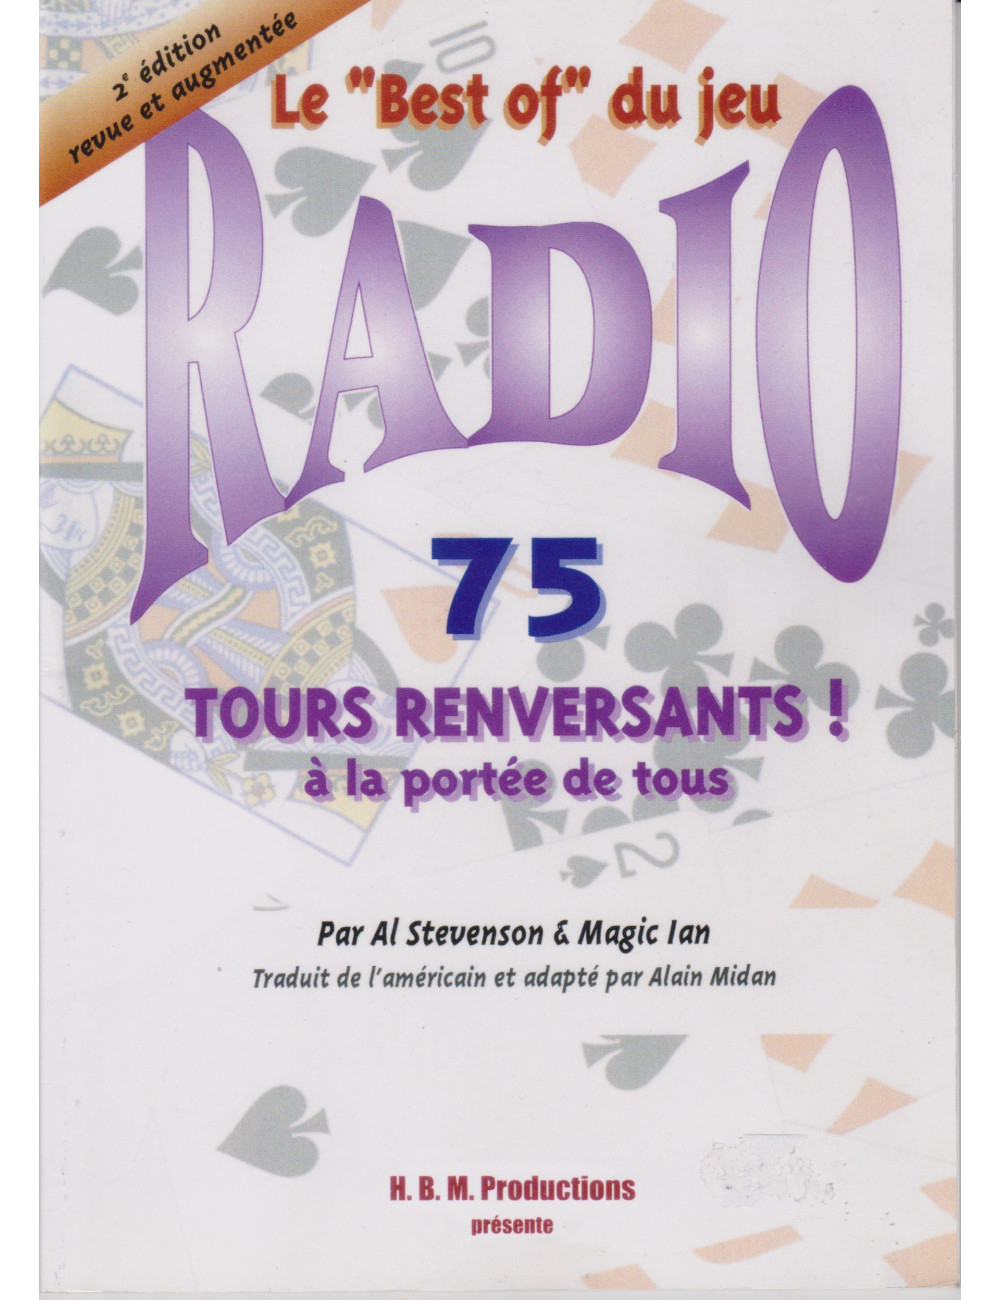 Le "best of" du Jeu Radio